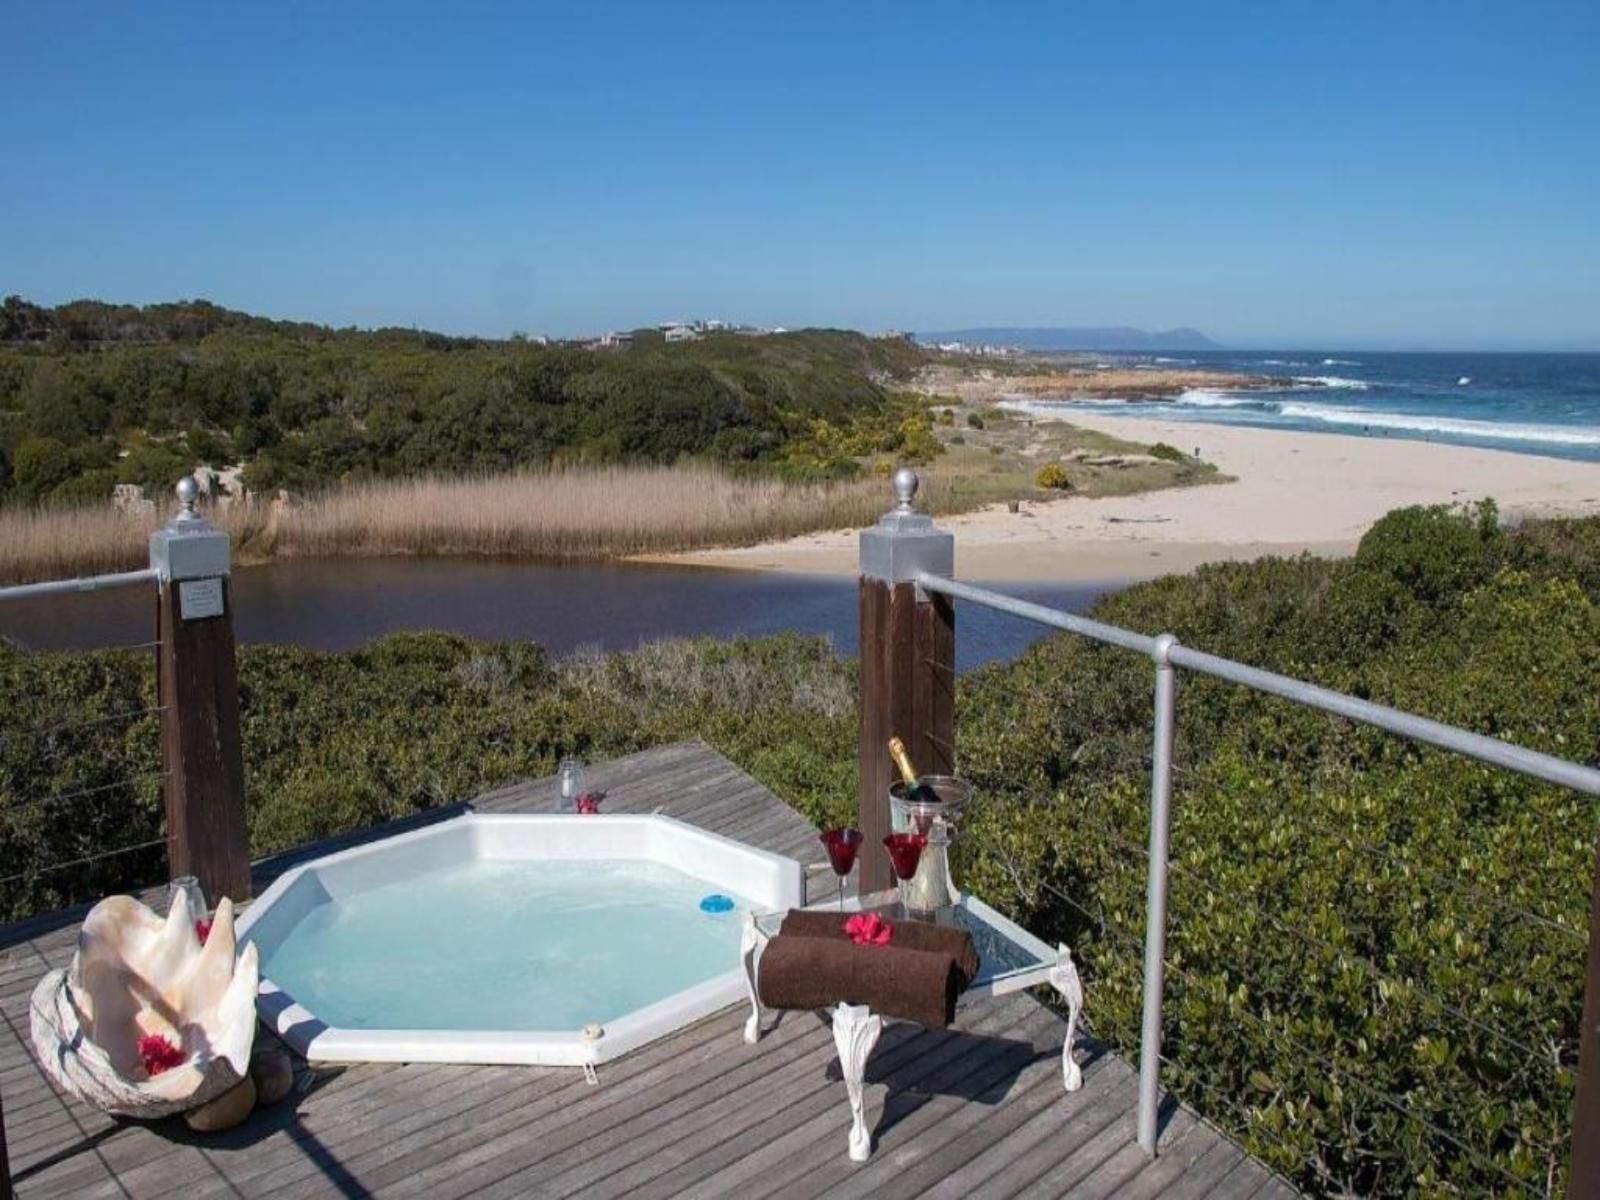 Kennedy S Beach Villa Onrus Hermanus Western Cape South Africa Beach, Nature, Sand, Swimming Pool